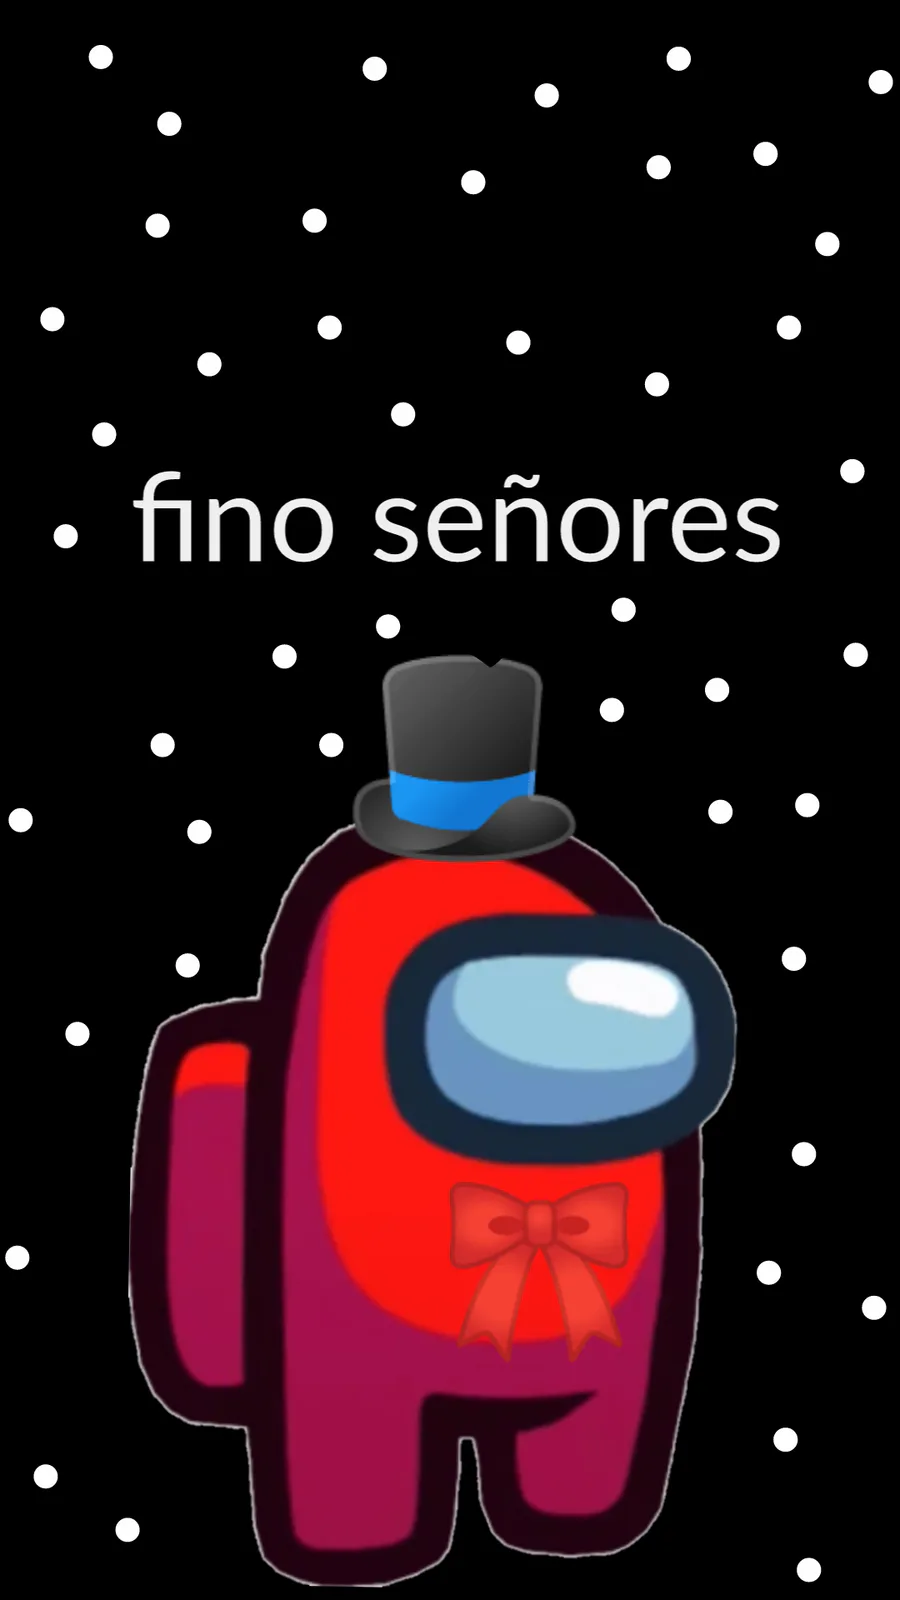 Novacraft99 on Game Jolt: Fino señores 🧐